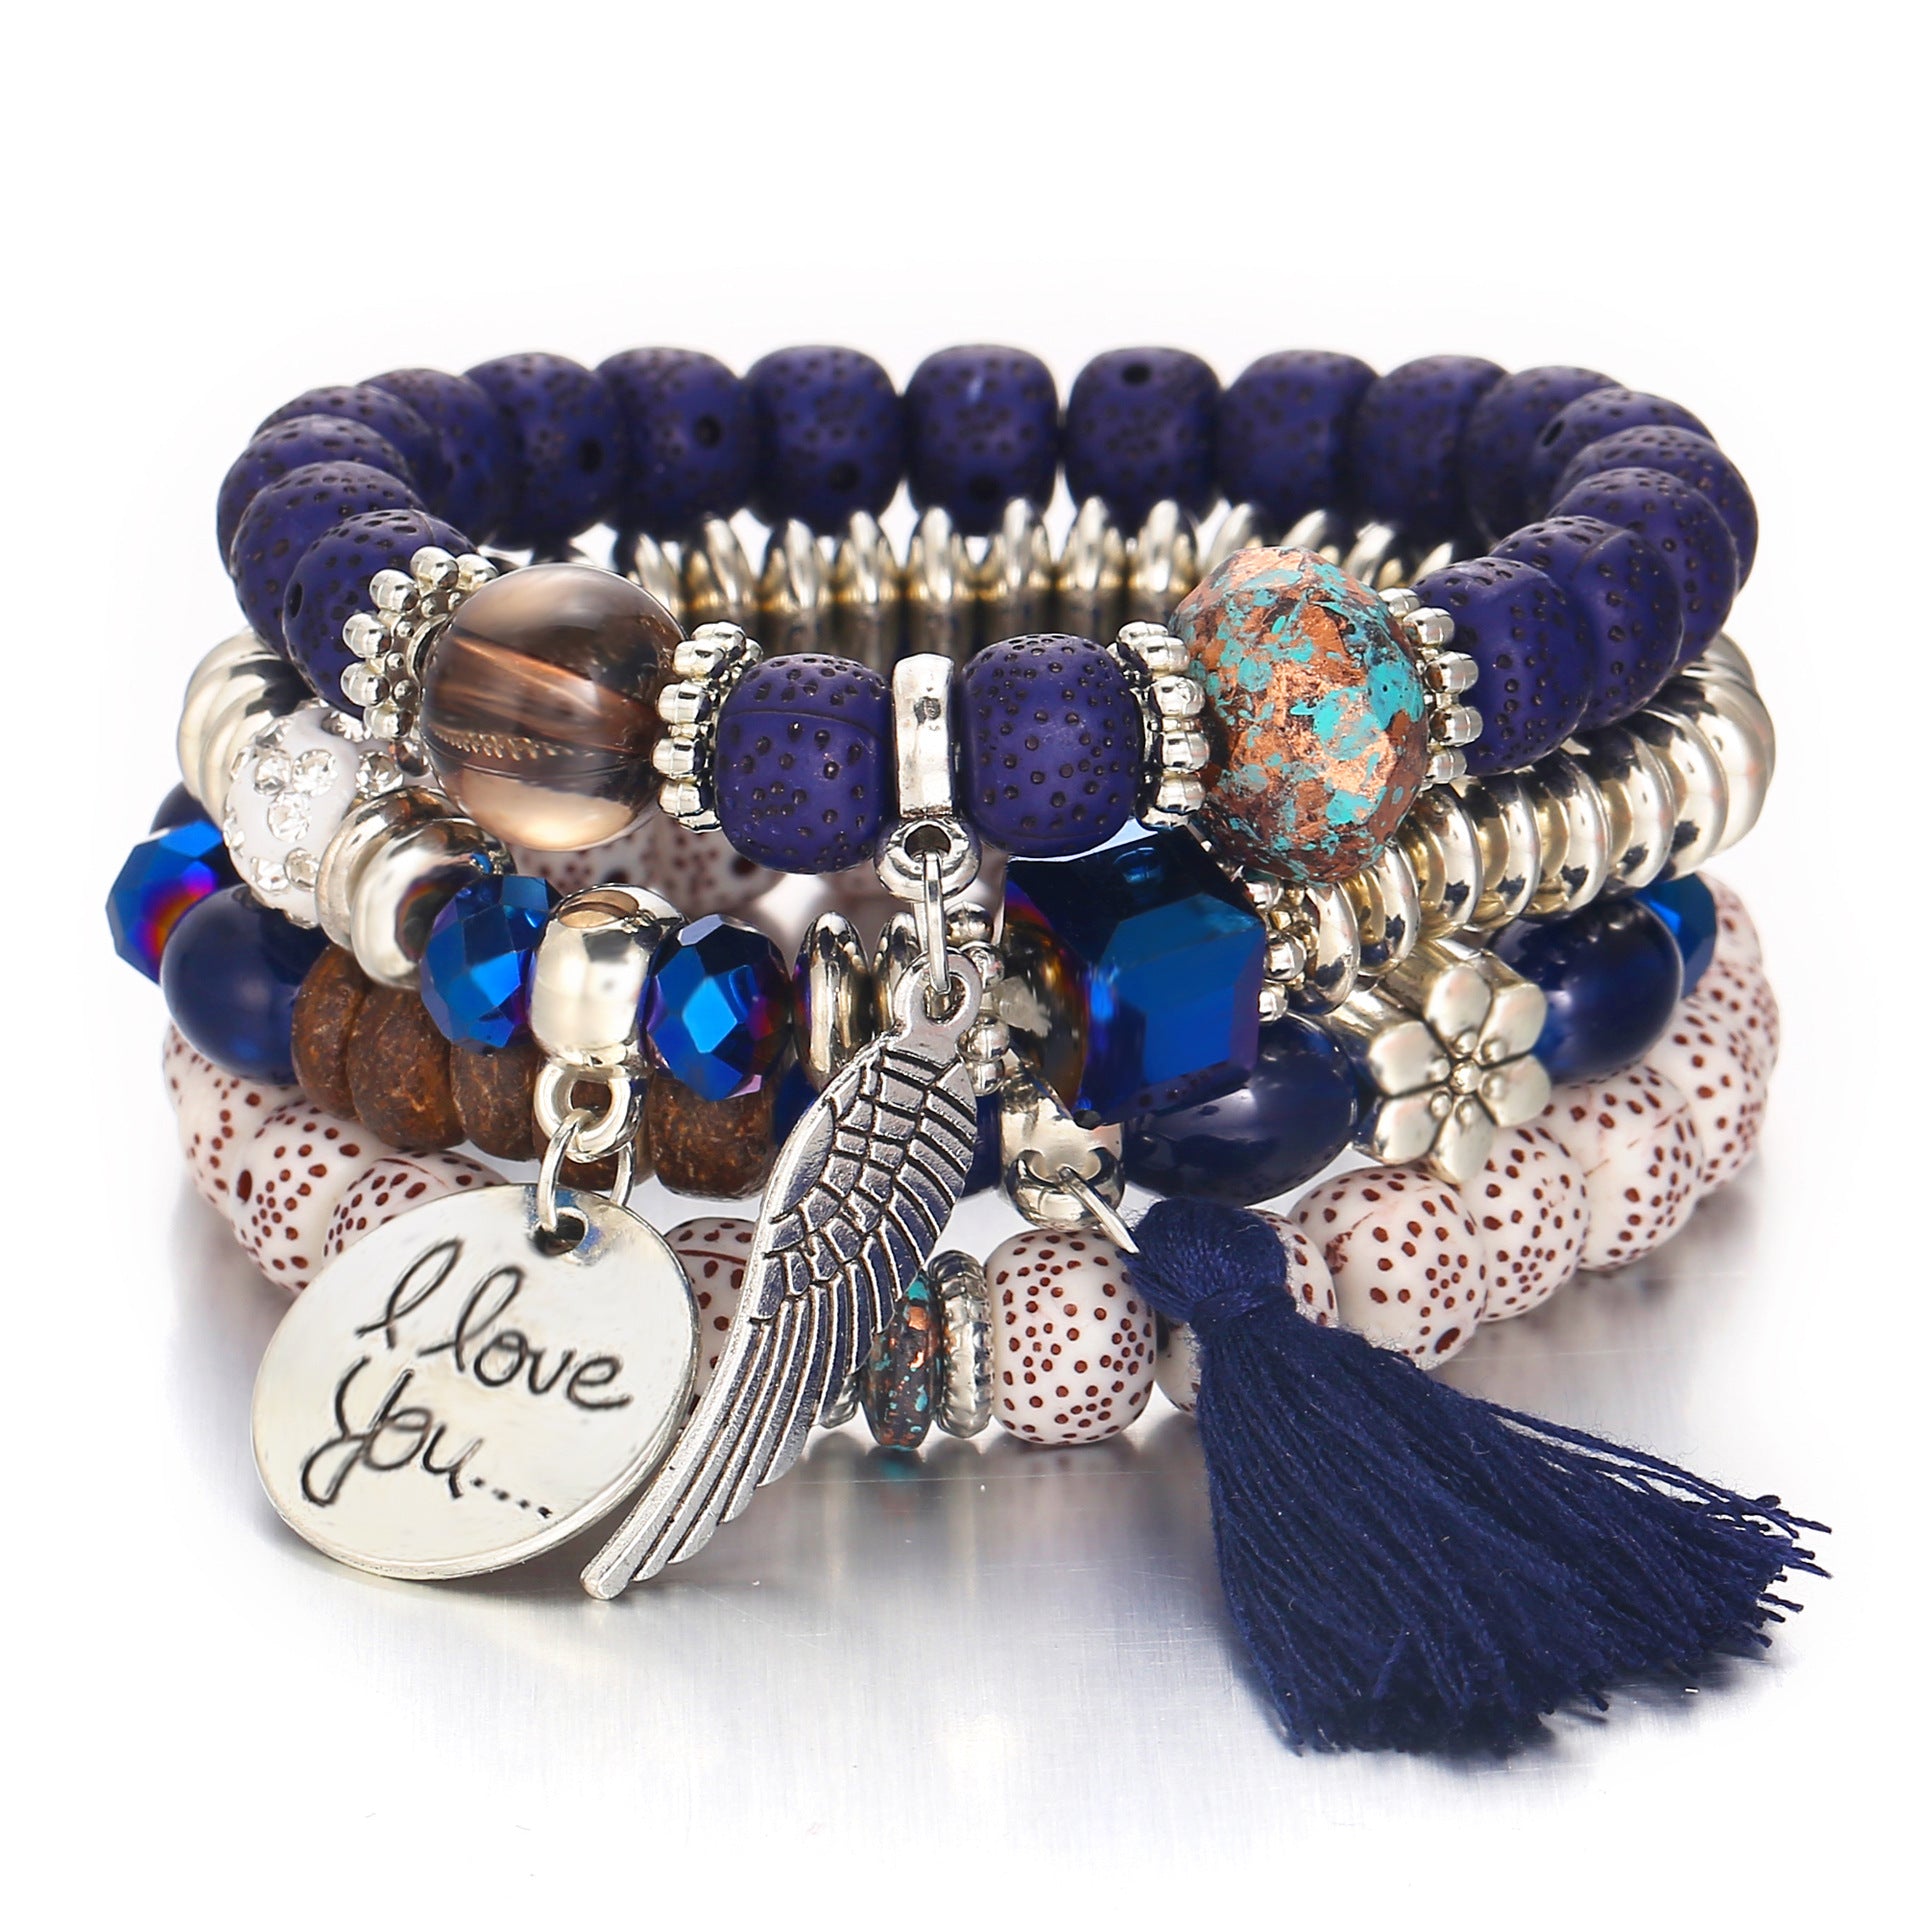 Woven Beads Chain Leather Cuff Bracelet w/ I Love You Pendant - Dark Blue